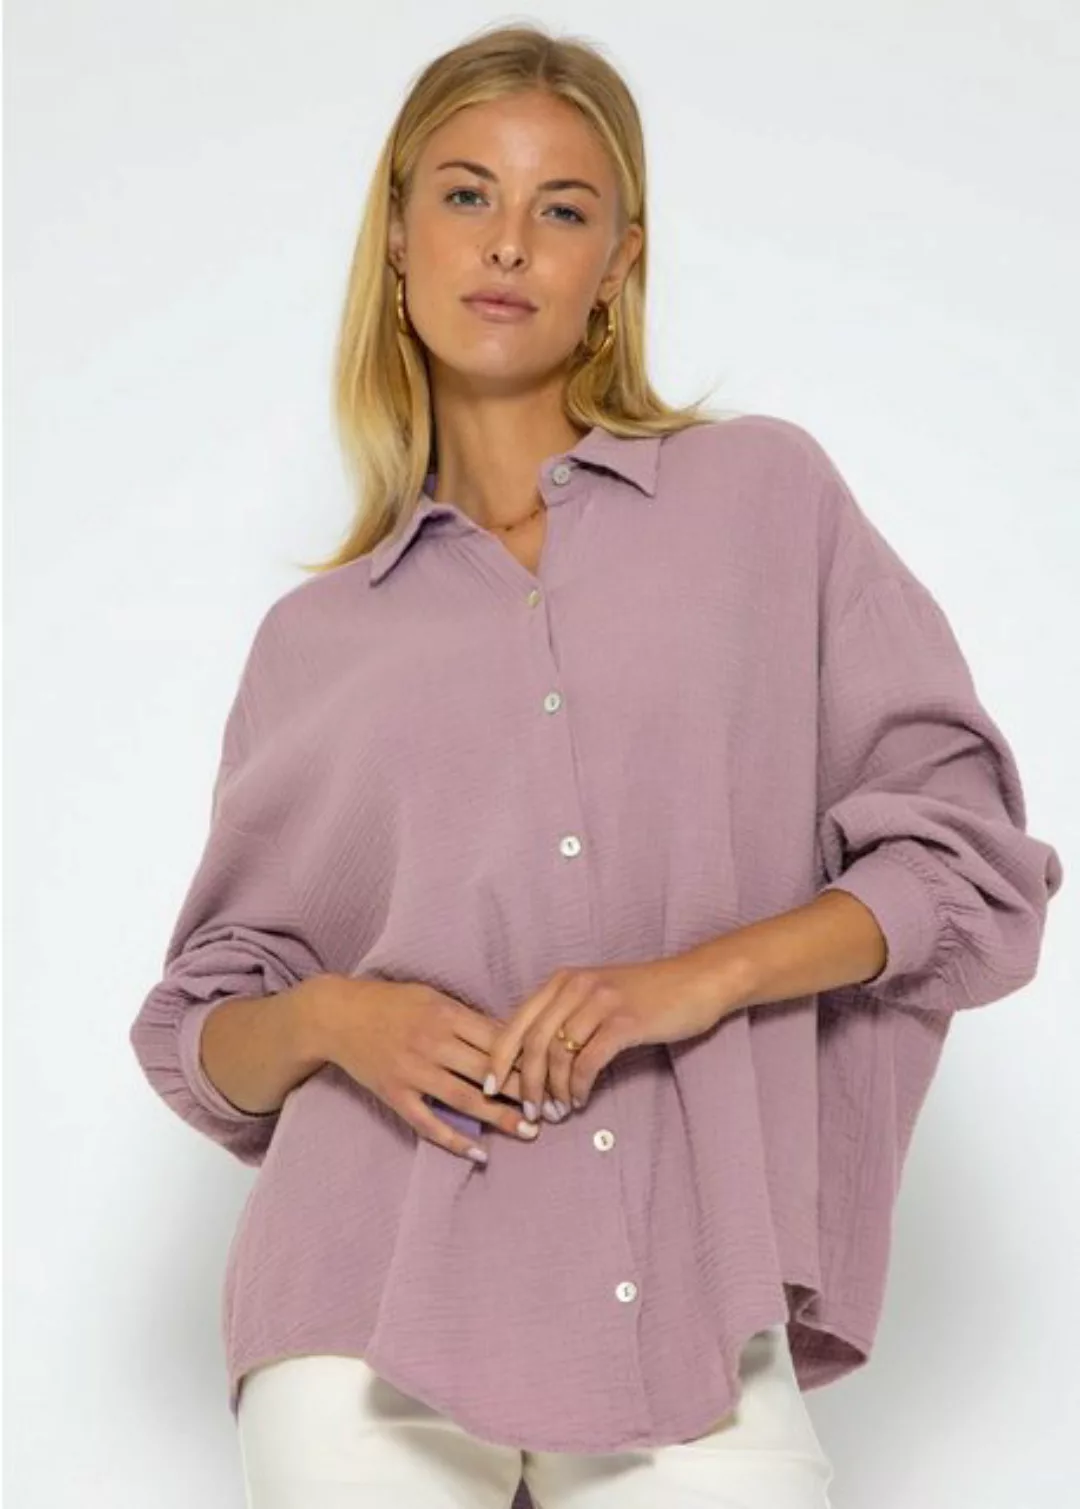 SASSYCLASSY Longbluse Oversize Musselin Bluse Damen Langarm Hemdbluse lang günstig online kaufen